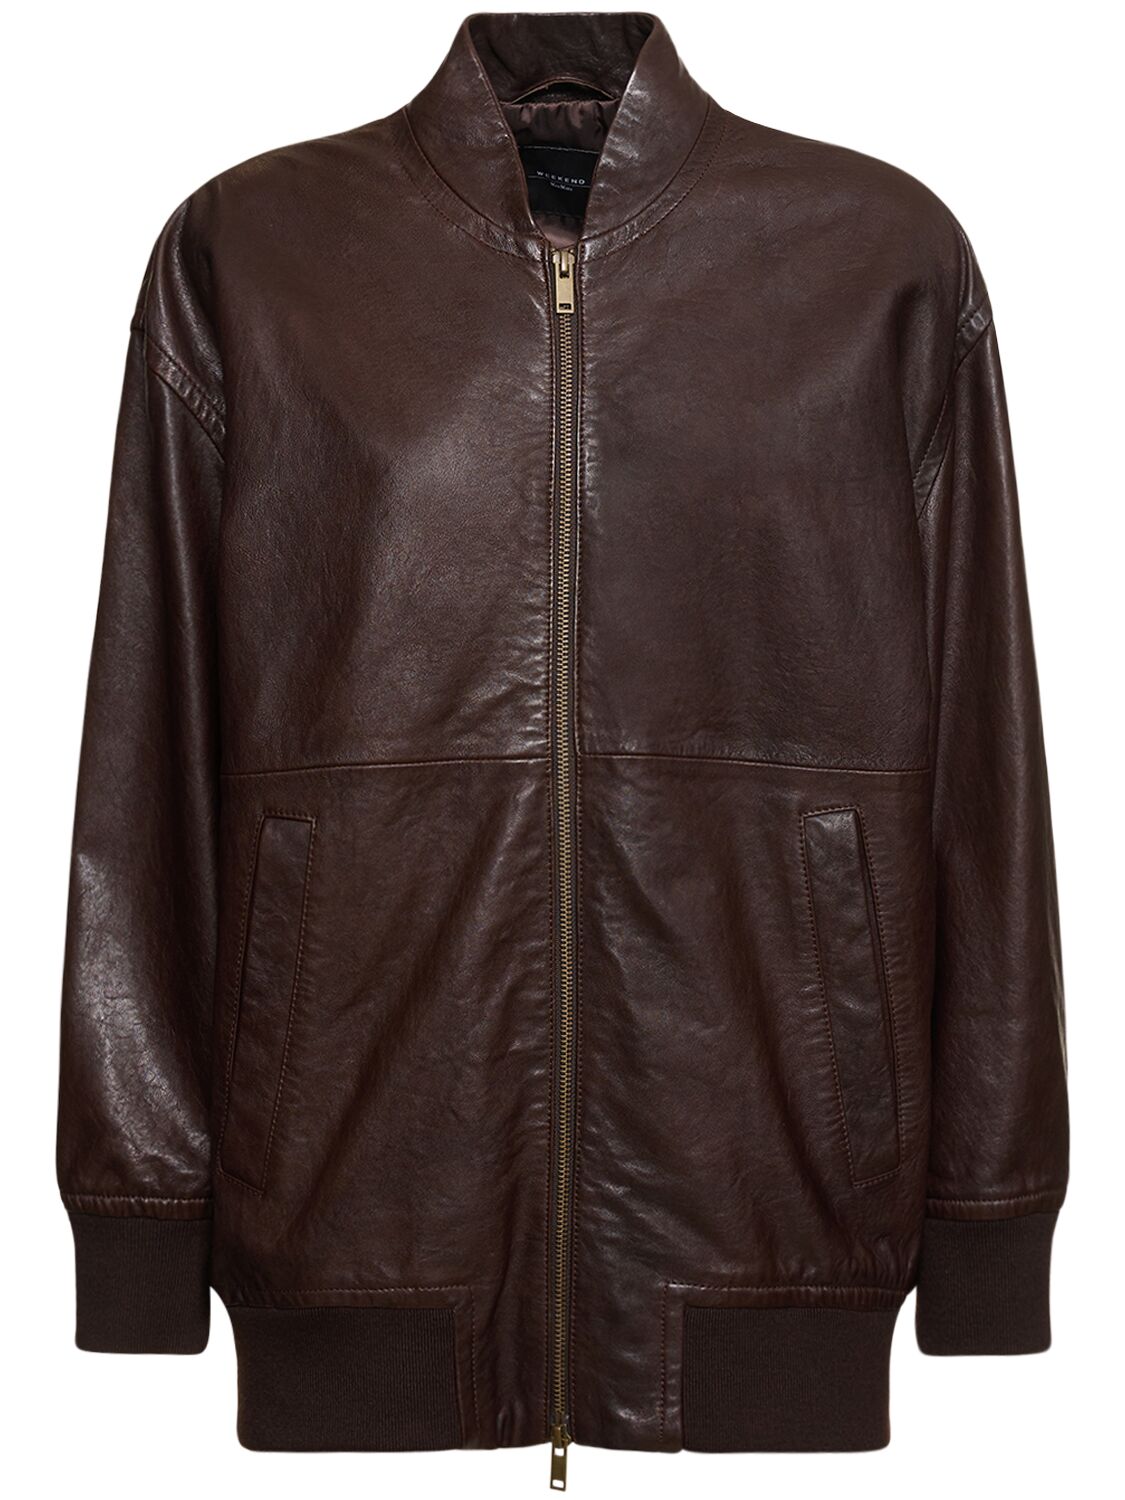 Image of Cursore Zip-up Leather Jacket